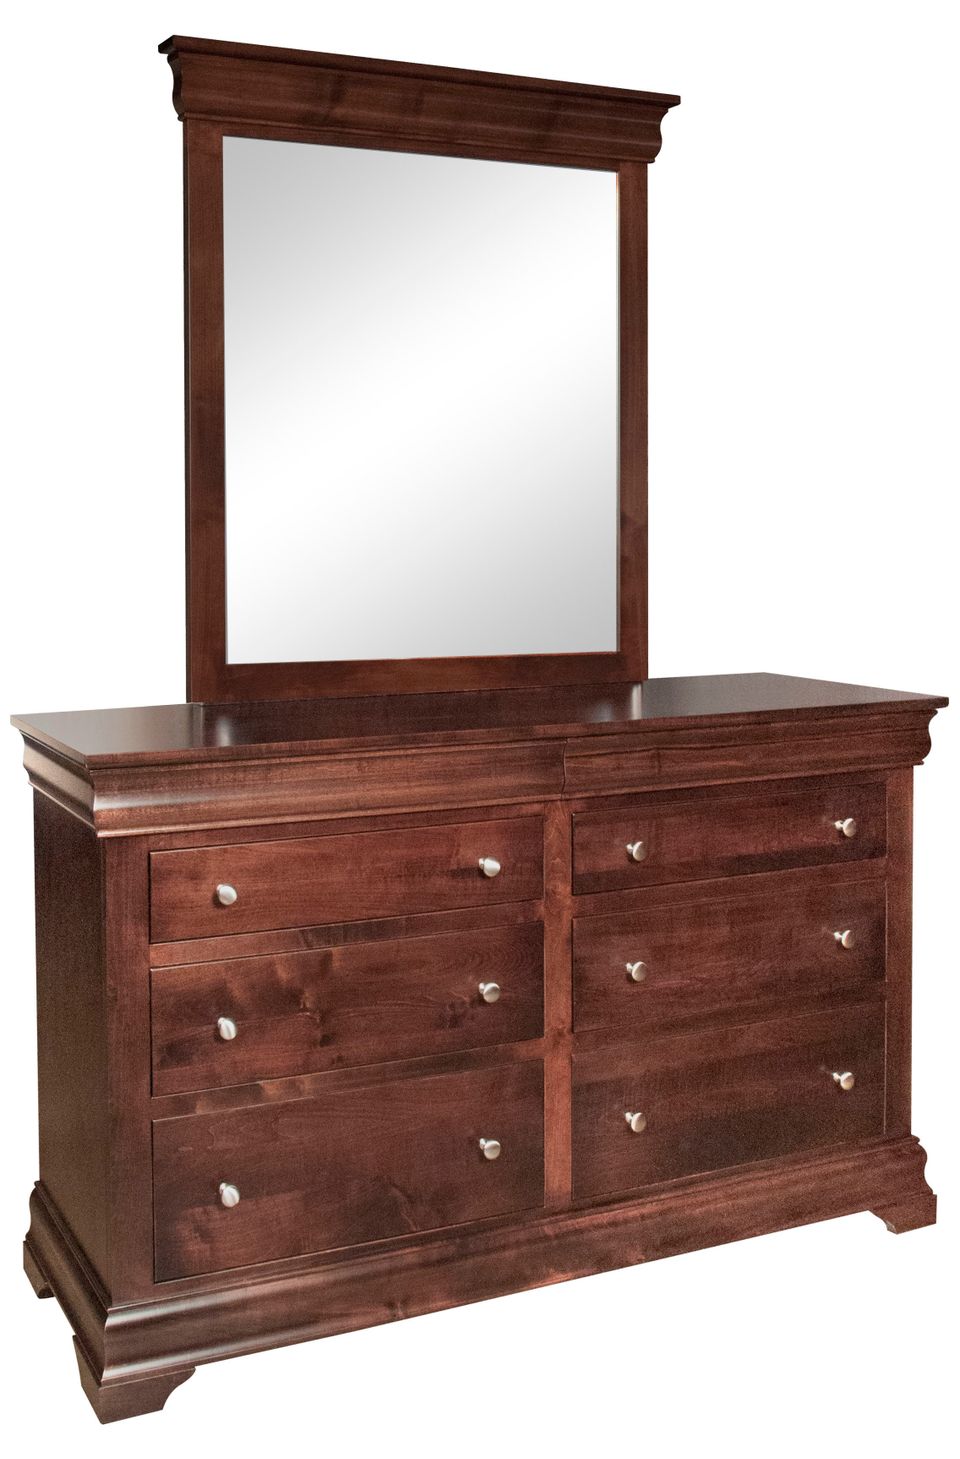 Aw loretto dresser with mirror